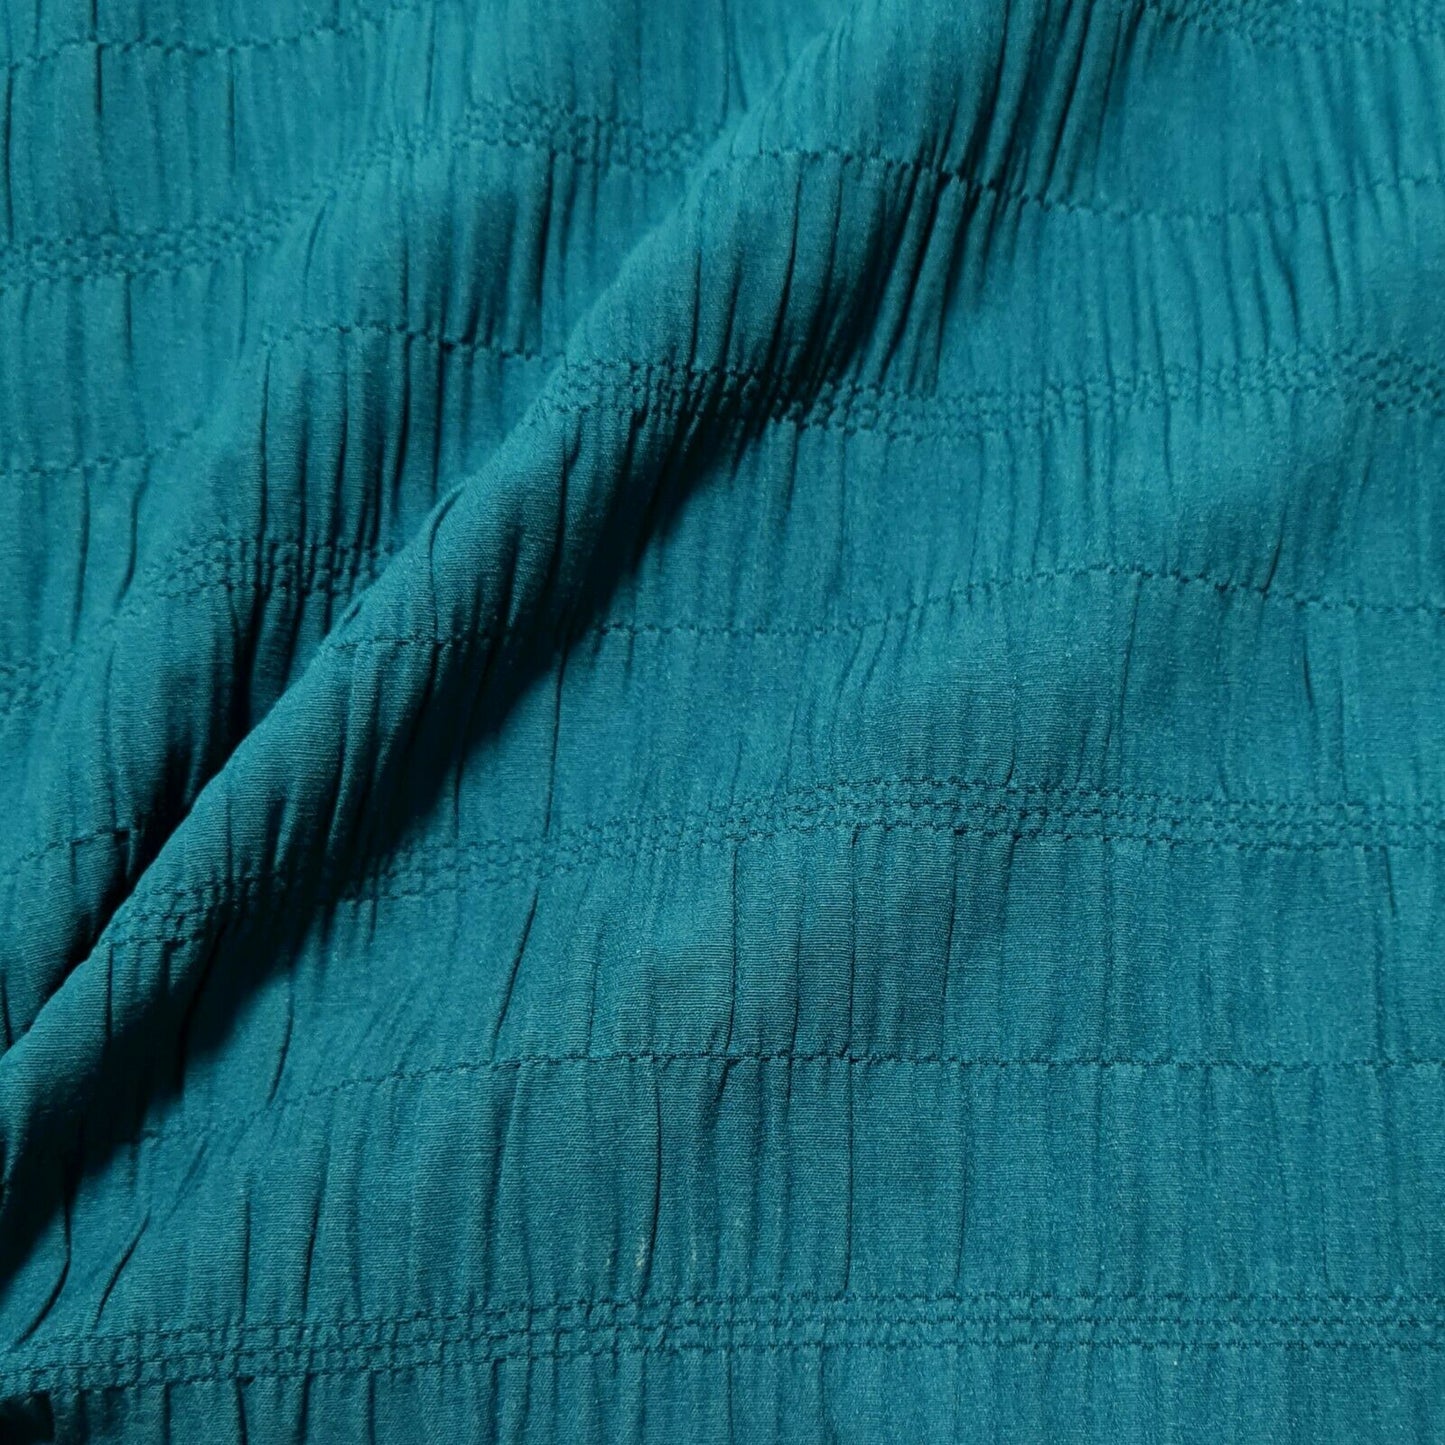 Polycotton Fabric Crinckled Effect Dressmaking 49" Wide